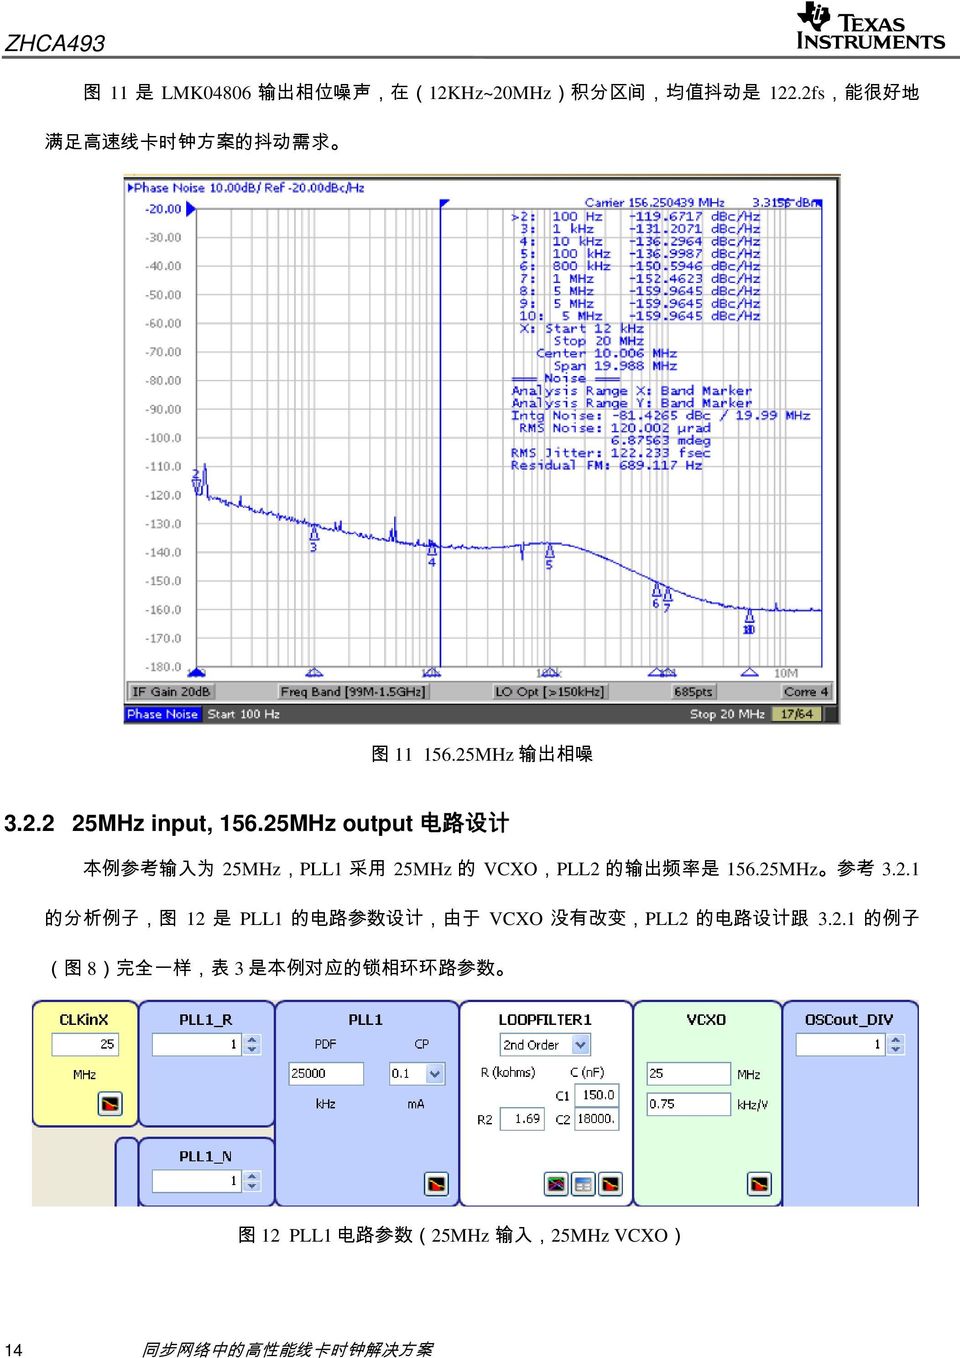 25MHz output 电 路 设 计 本 例 参 考 输 入 为 25MHz,PLL1 采 用 25MHz 的 VCXO,PLL2 的 输 出 频 率 是 156.25MHz 参 考 3.2.1 的 分 析 例 子, 图 12 是 PLL1 的 电 路 参 数 设 计, 由 于 VCXO 没 有 改 变,PLL2 的 电 路 设 计 跟 3.